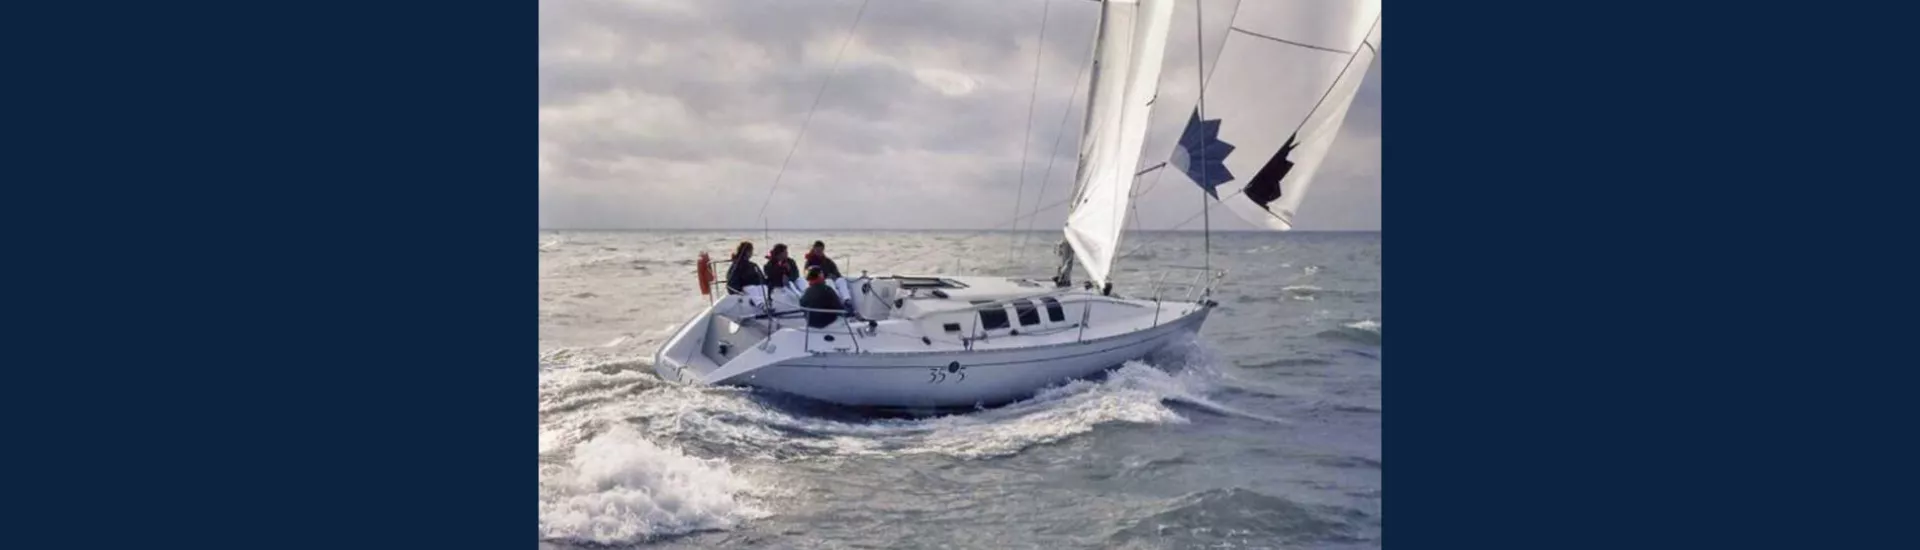 beneteau first 35 sailboatdata